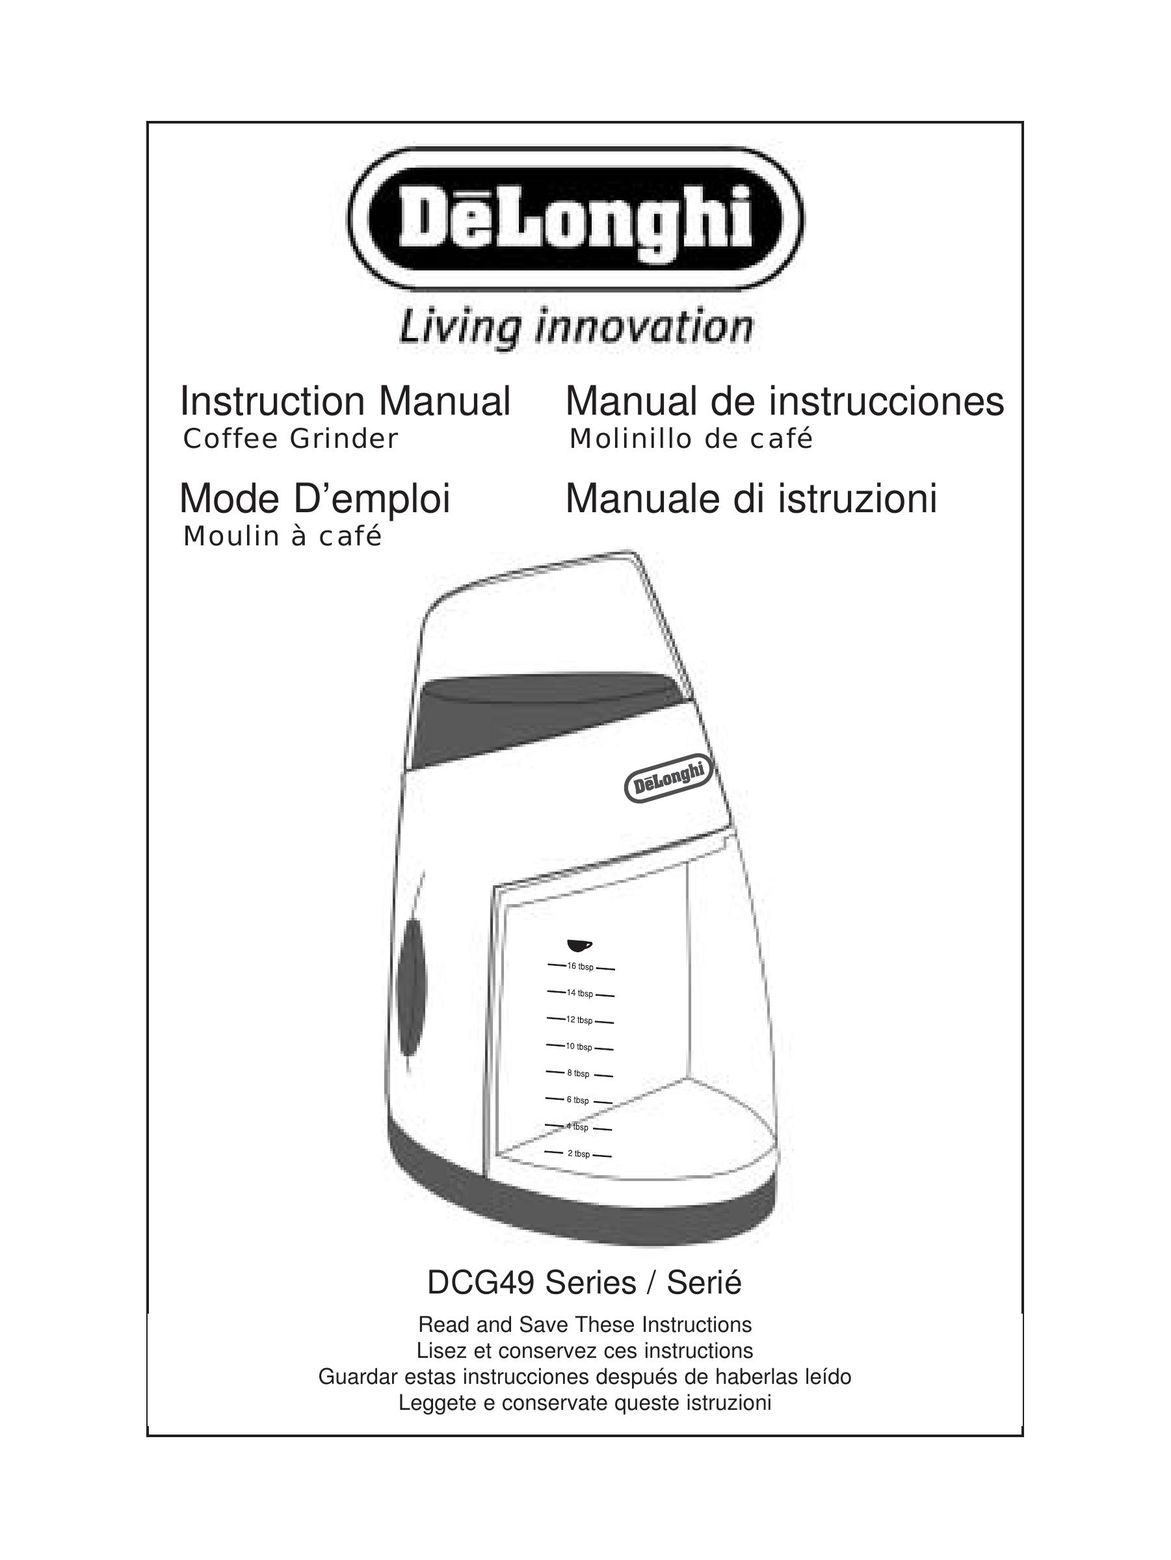 DeLonghi DCG49 Series Coffee Grinder User Manual